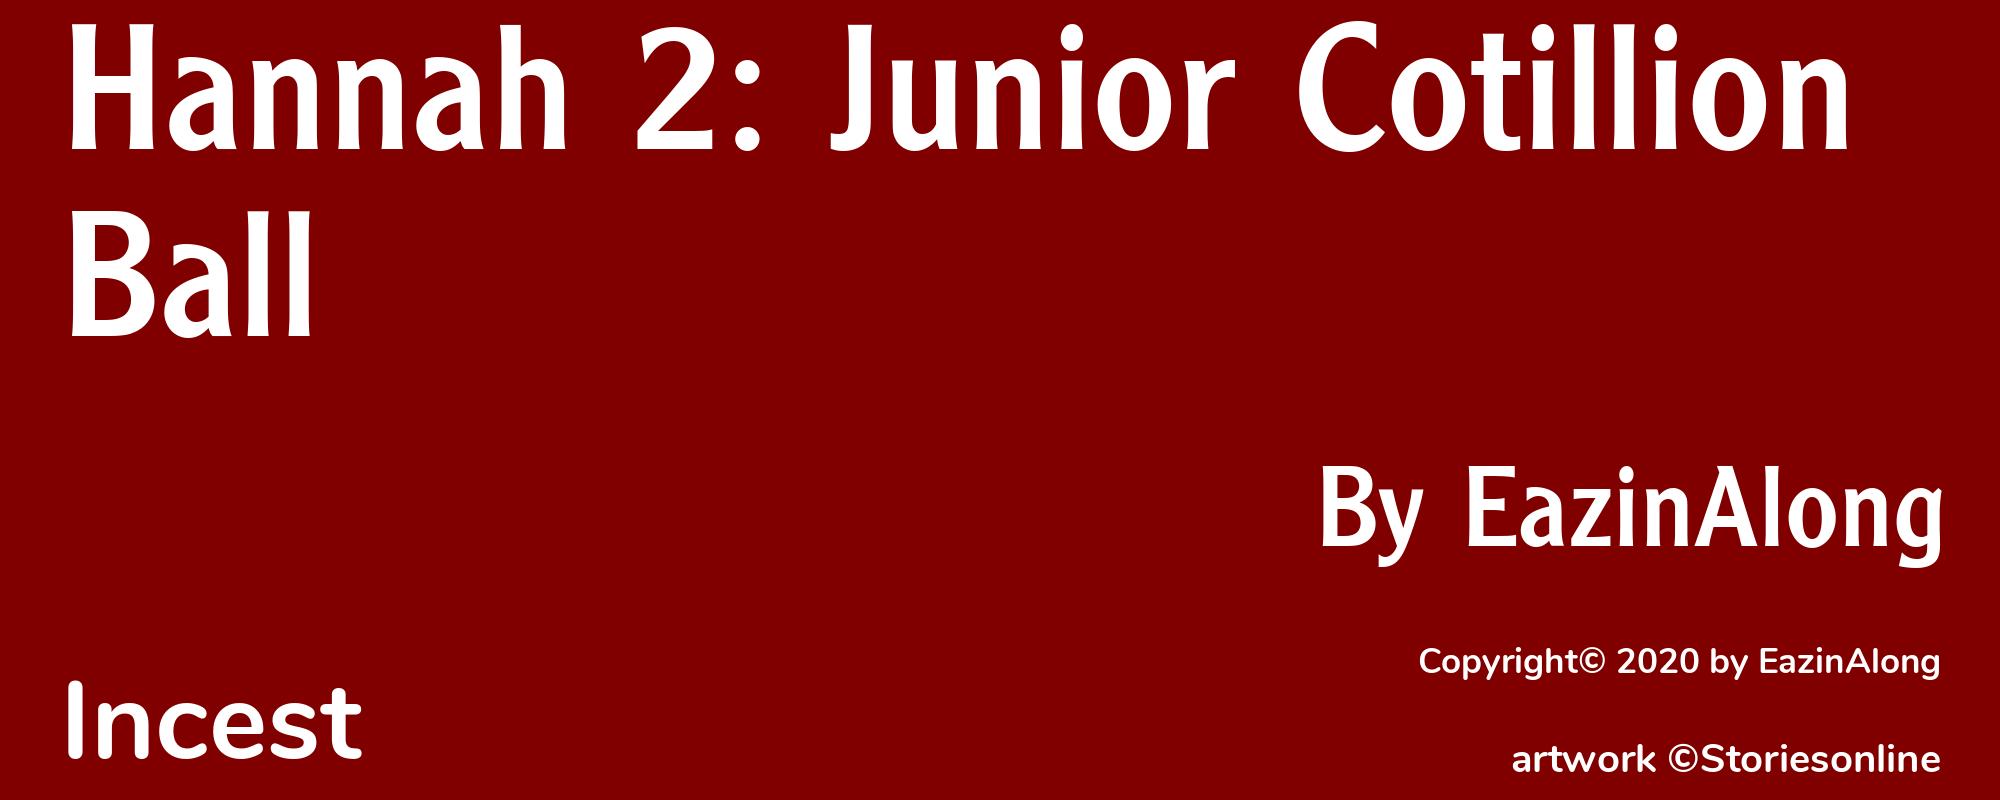 Hannah 2: Junior Cotillion Ball - Cover